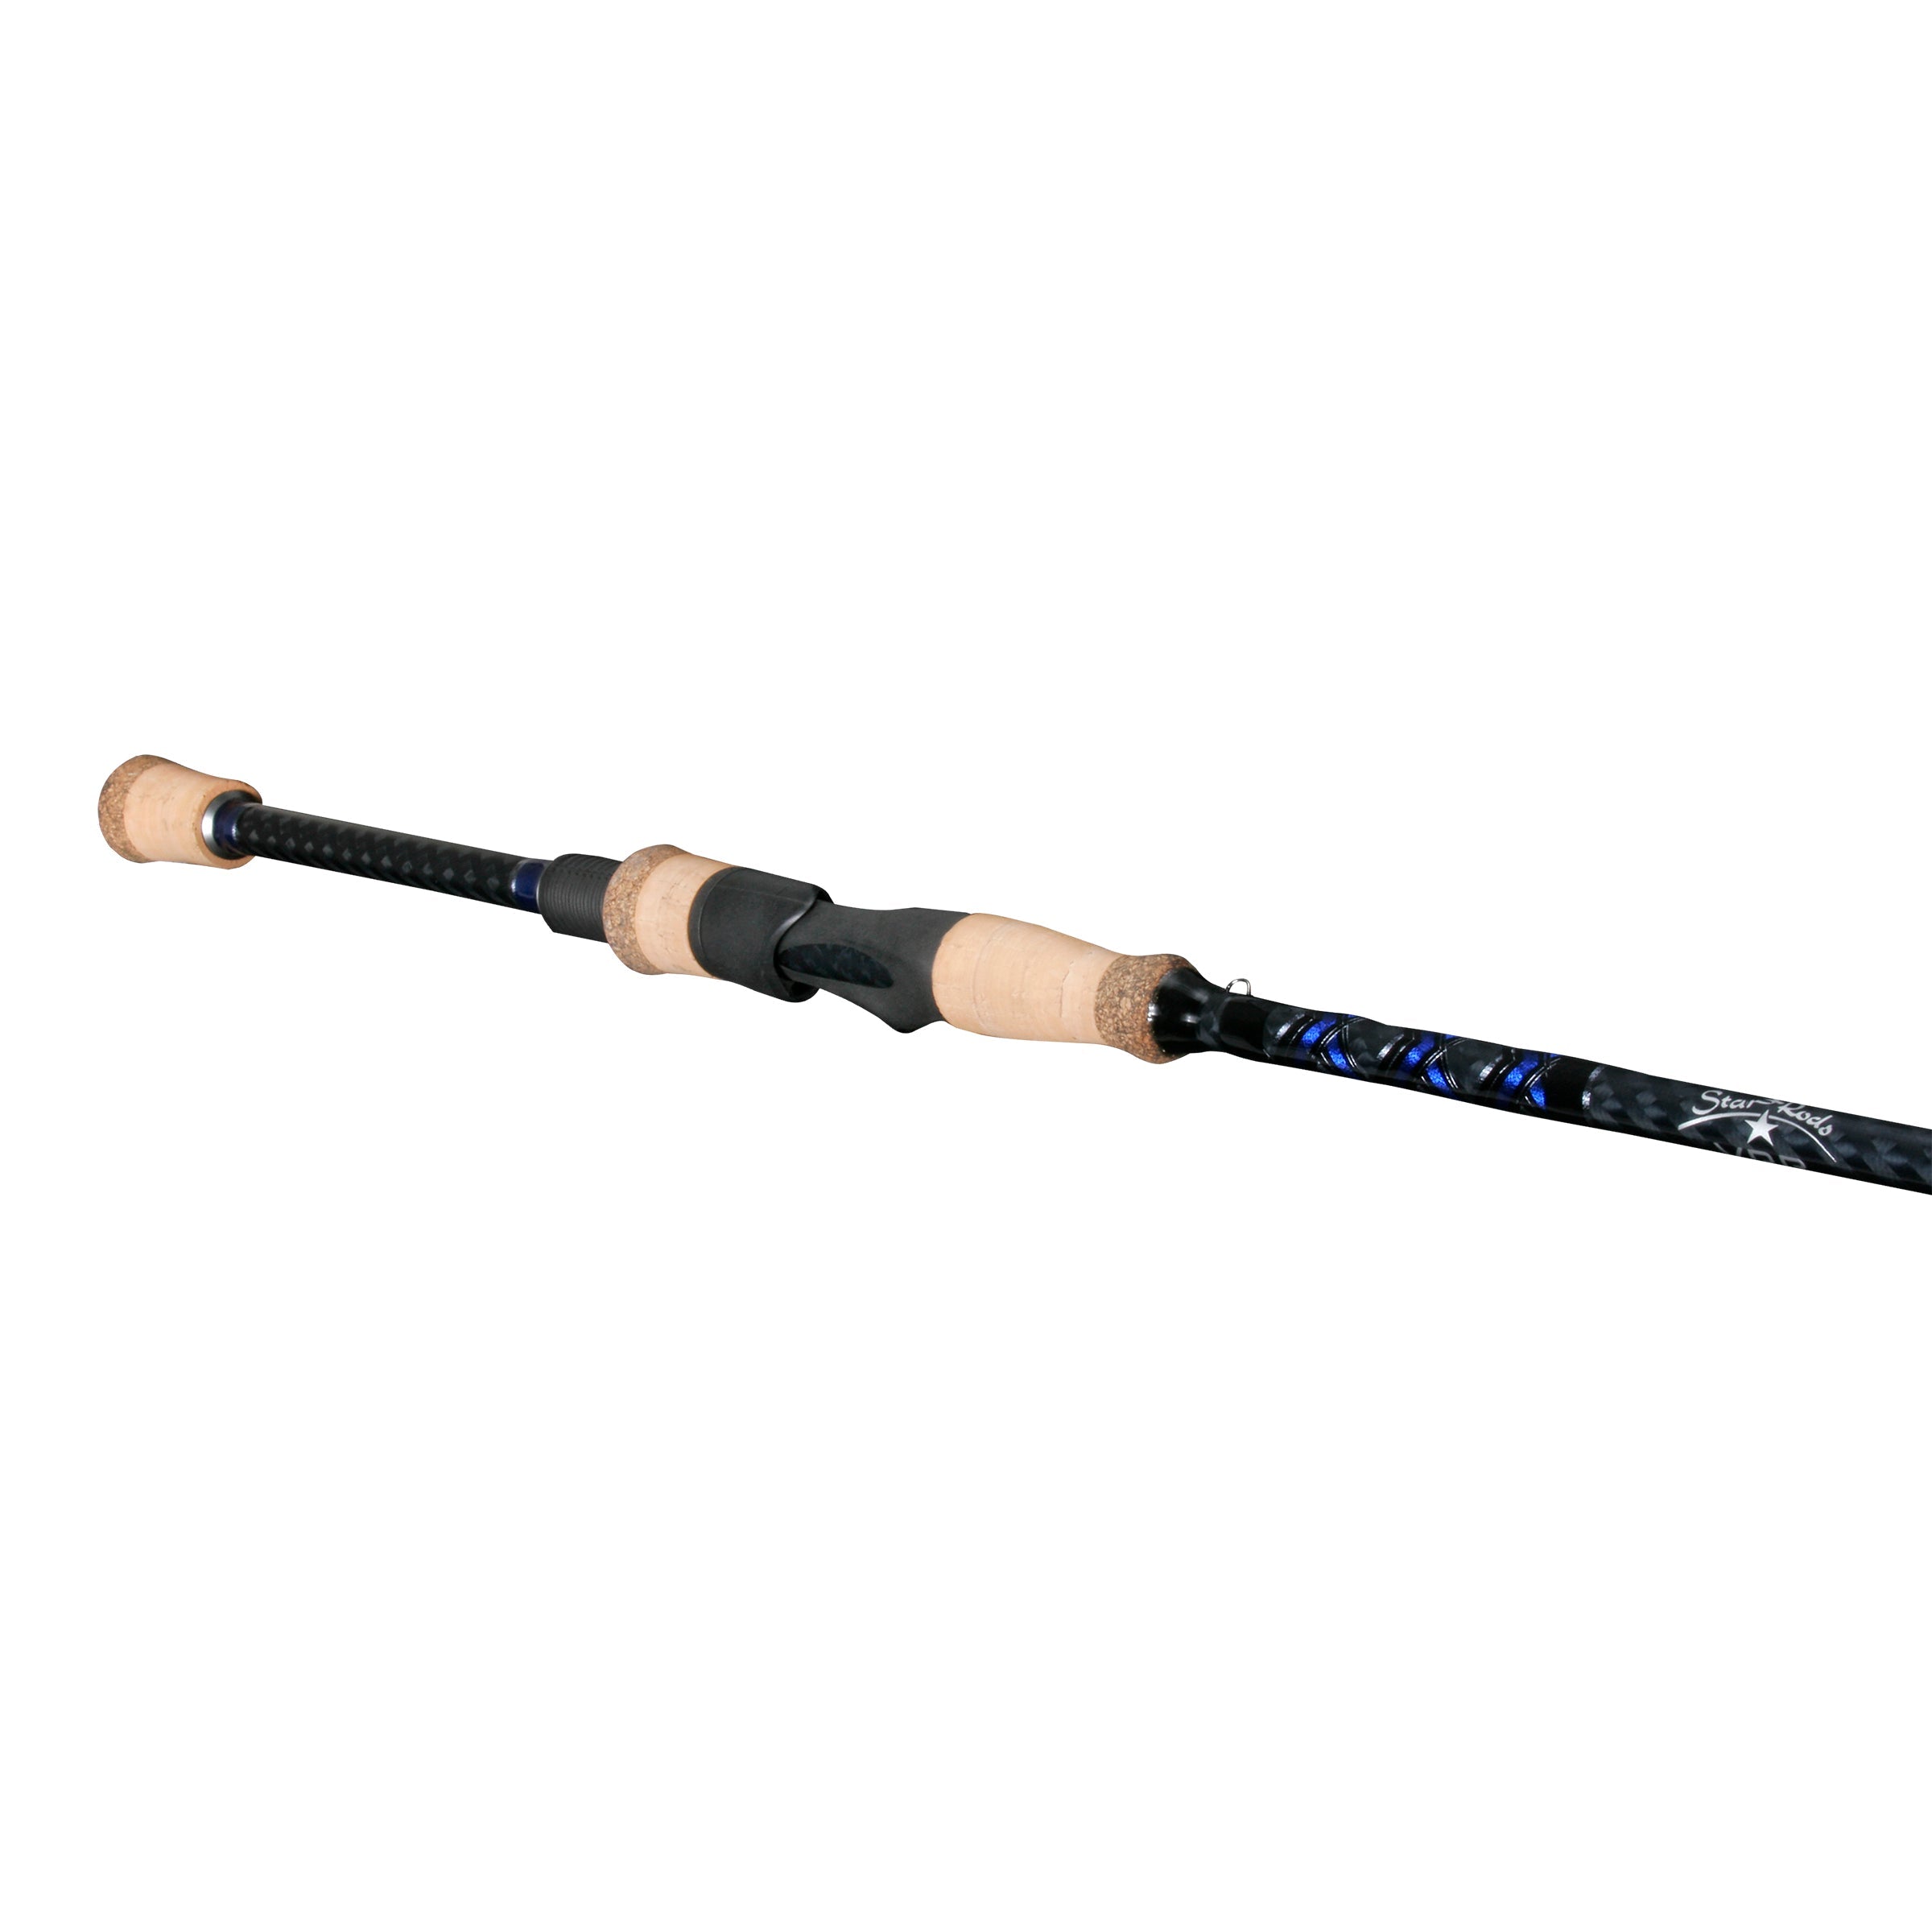 harayaa Portable Fishing Rod Fixed Ball Soft Wear Resistant Reusable Rubber  Fishing Pole Clip Fastener Binding Clip, Yellow - Yahoo Shopping